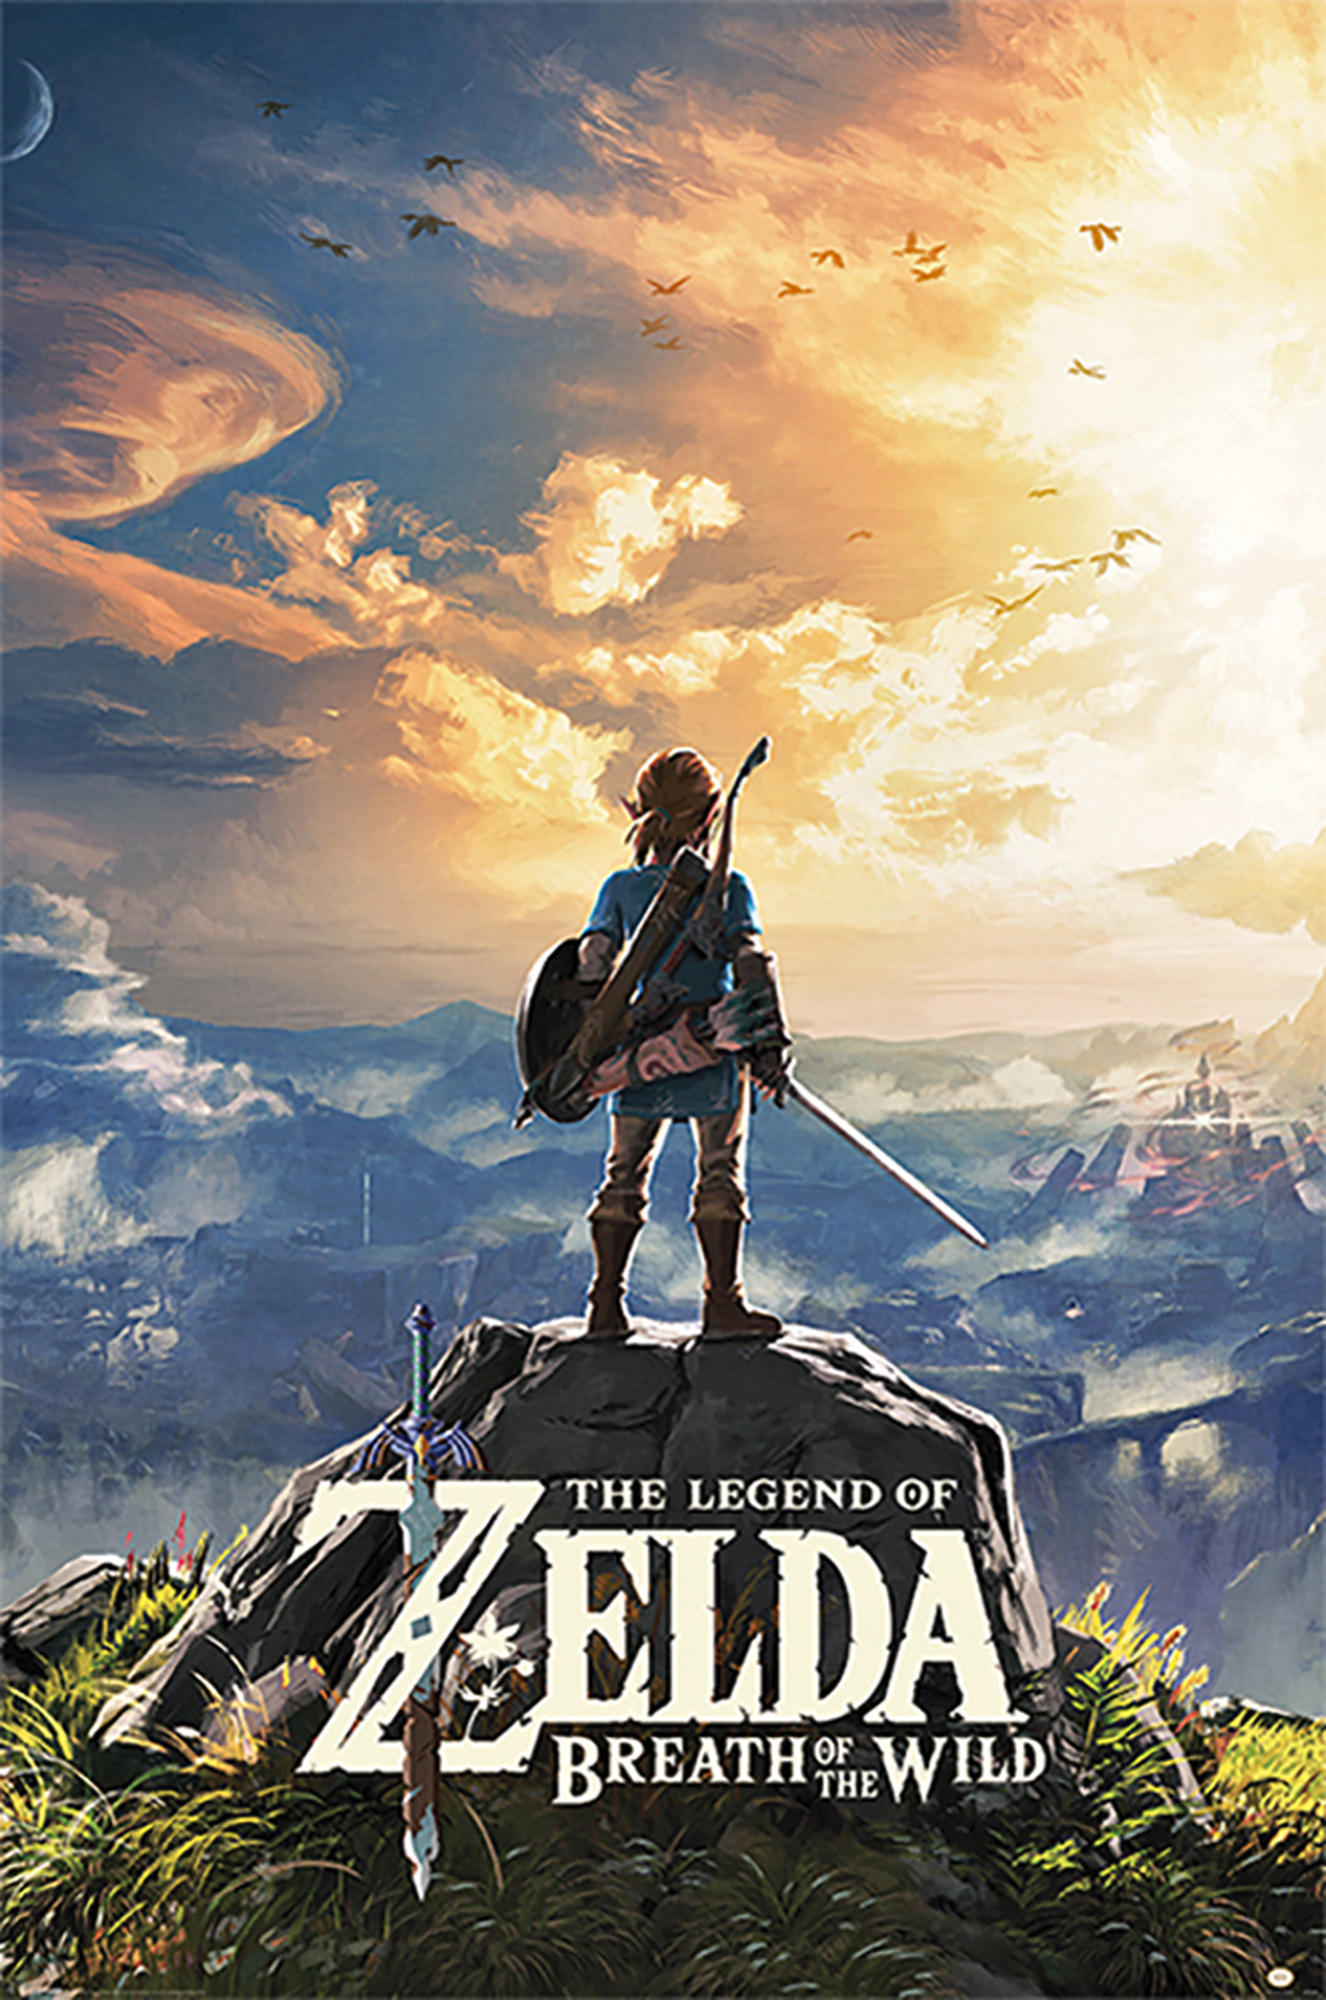 of The INTERNATIONAL The Wild Poster Of Poster Legend Sunset Großformatige PYRAMID Breath Zelda